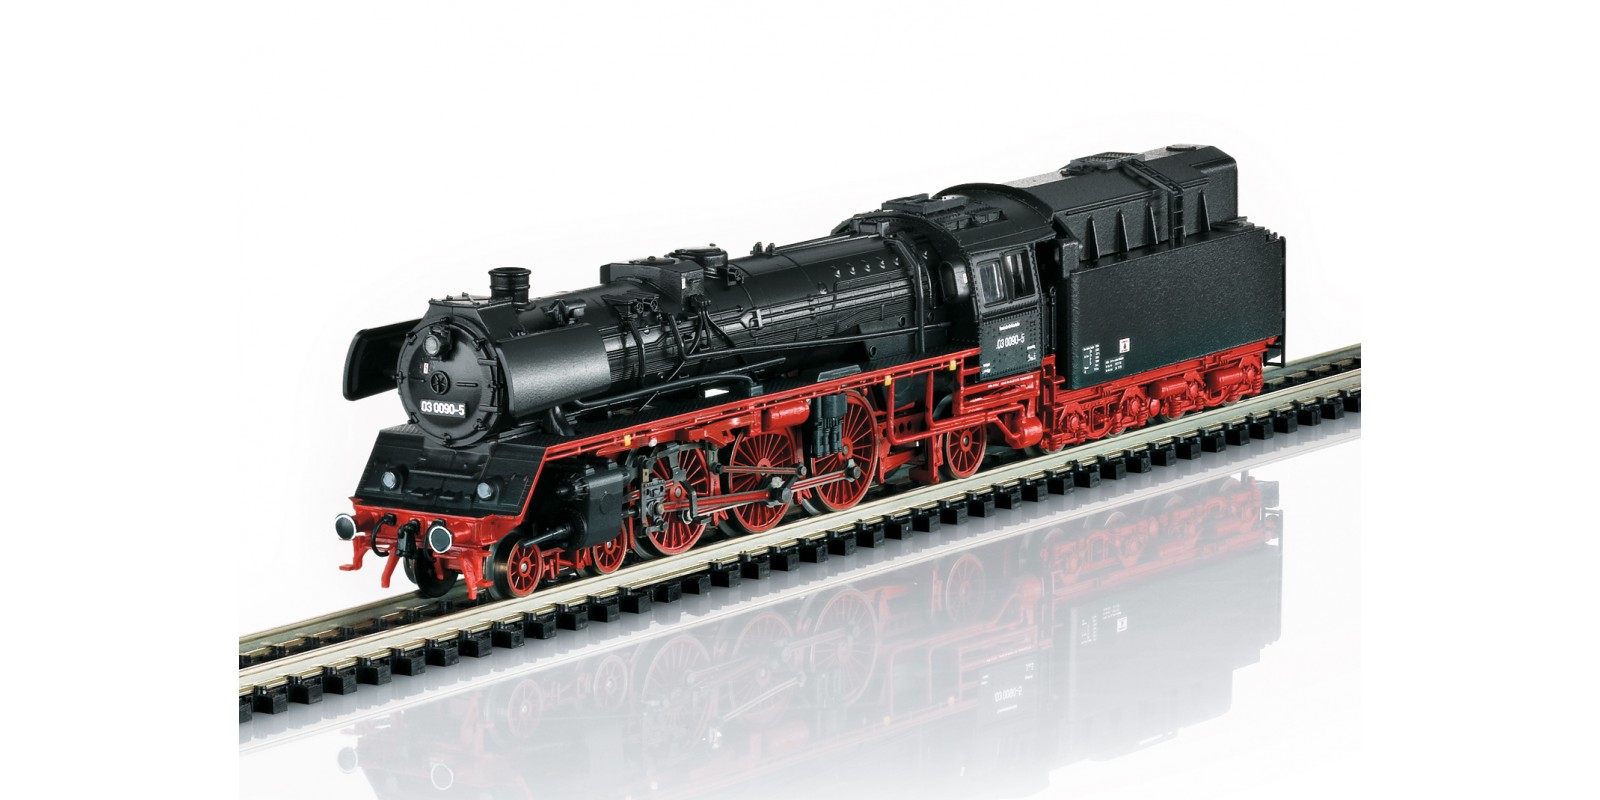 T16043 Class 03.10 "Reko" Steam Locomotive